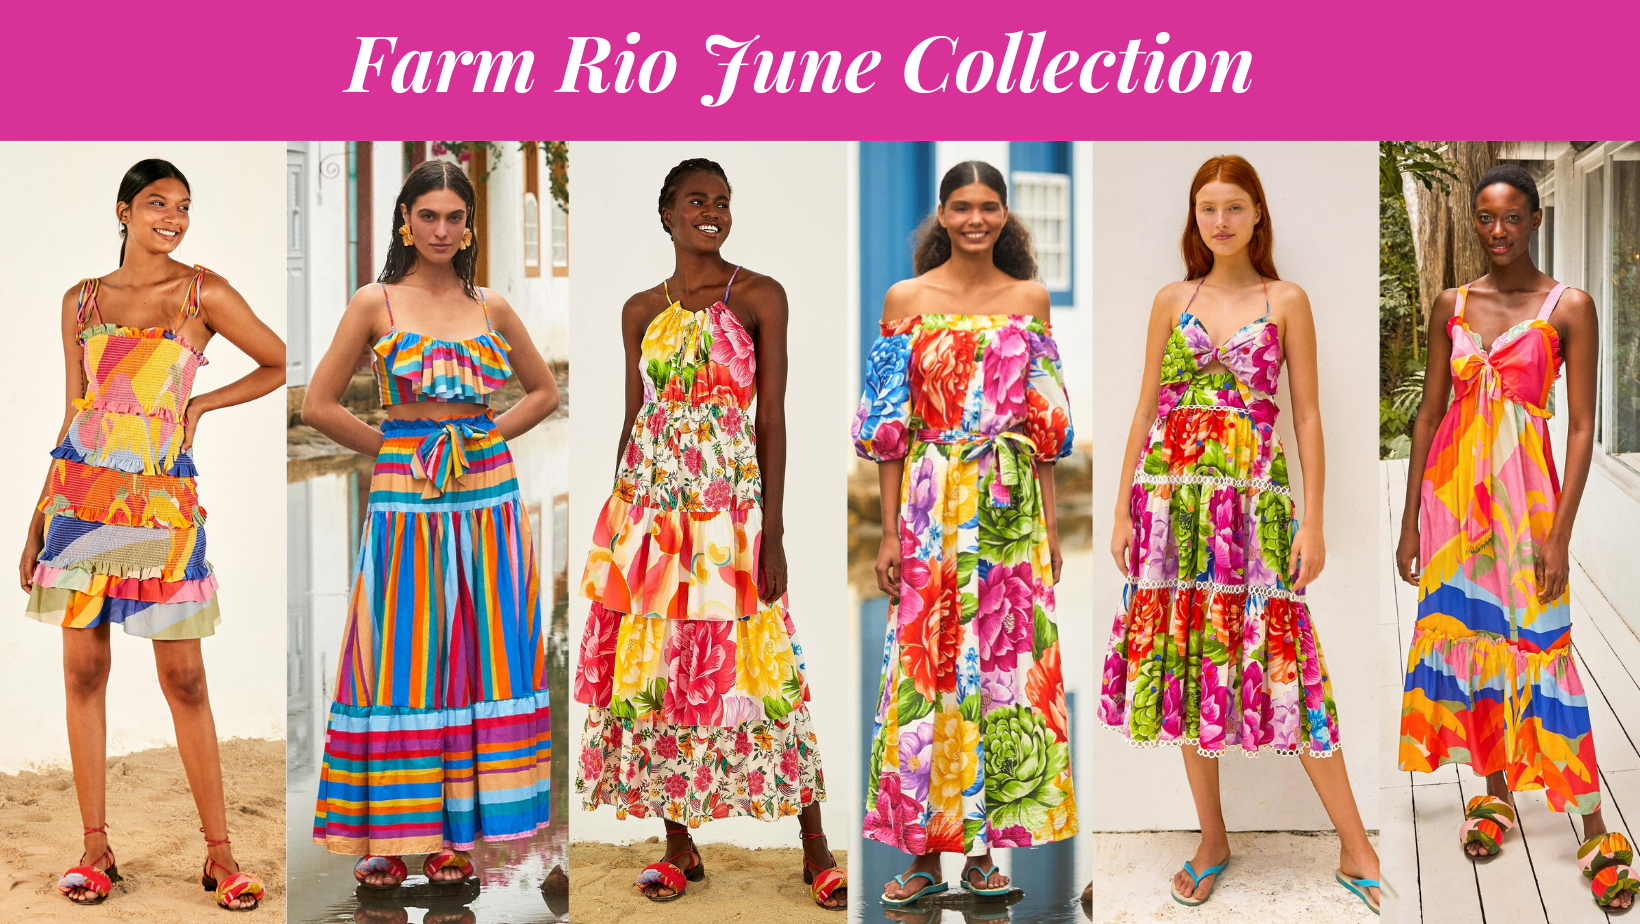 Farm Rio June Collection